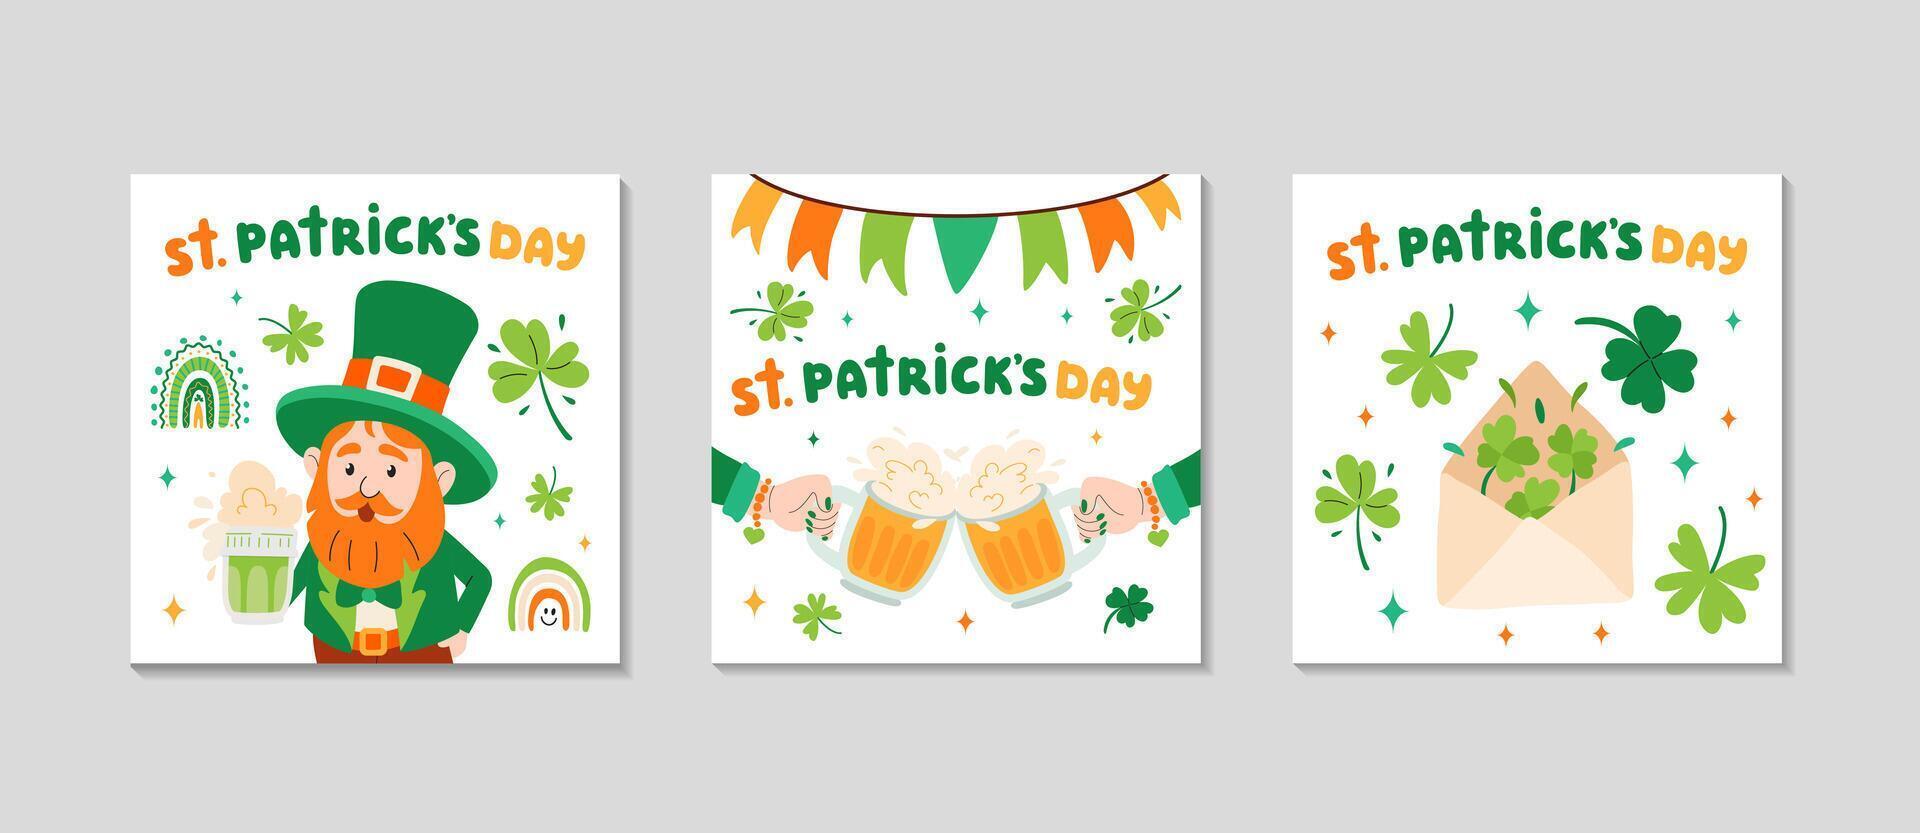 St. Patrick's day cards set. Greeting post background for Social media. Holidays square invitation. Festive Irish elements flags, shamrocks, beer, rainbow, leprechaun. Vector flat illustration.